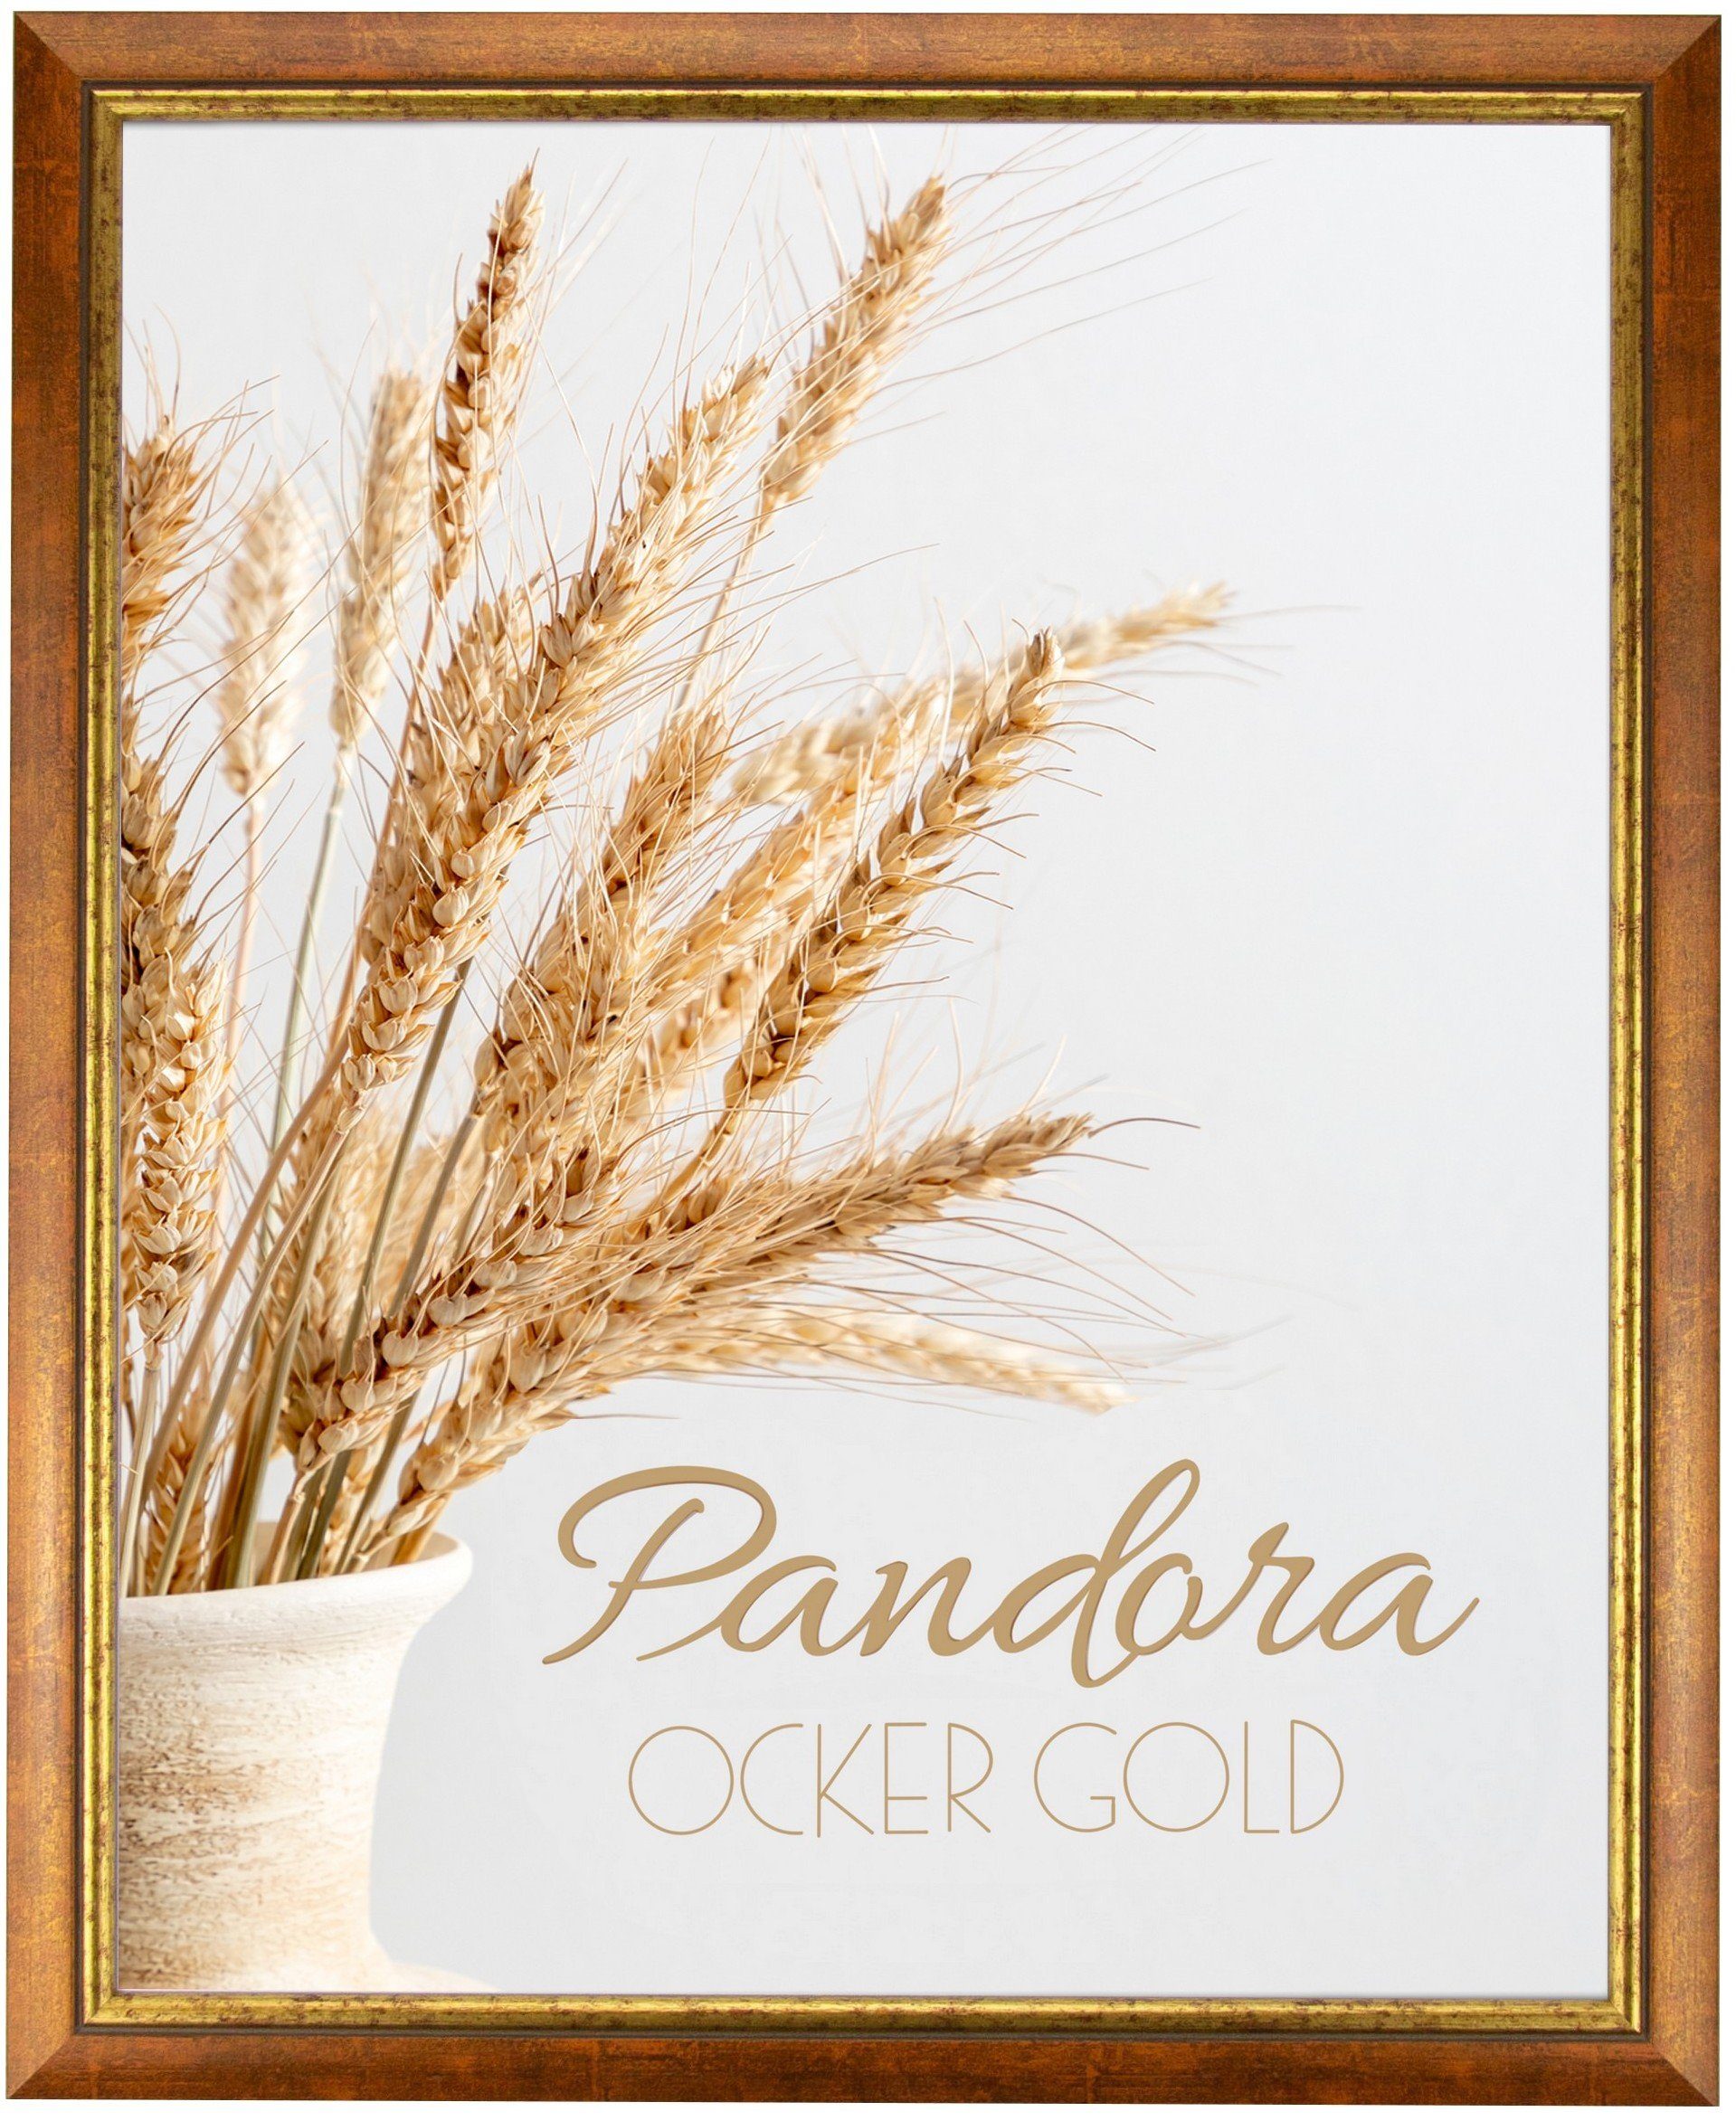 myposterframe Einzelrahmen Bilderrahmen Aged Vintage Pandora, (1 Stück), 20x27 cm, Ocker Gold, Echtholz